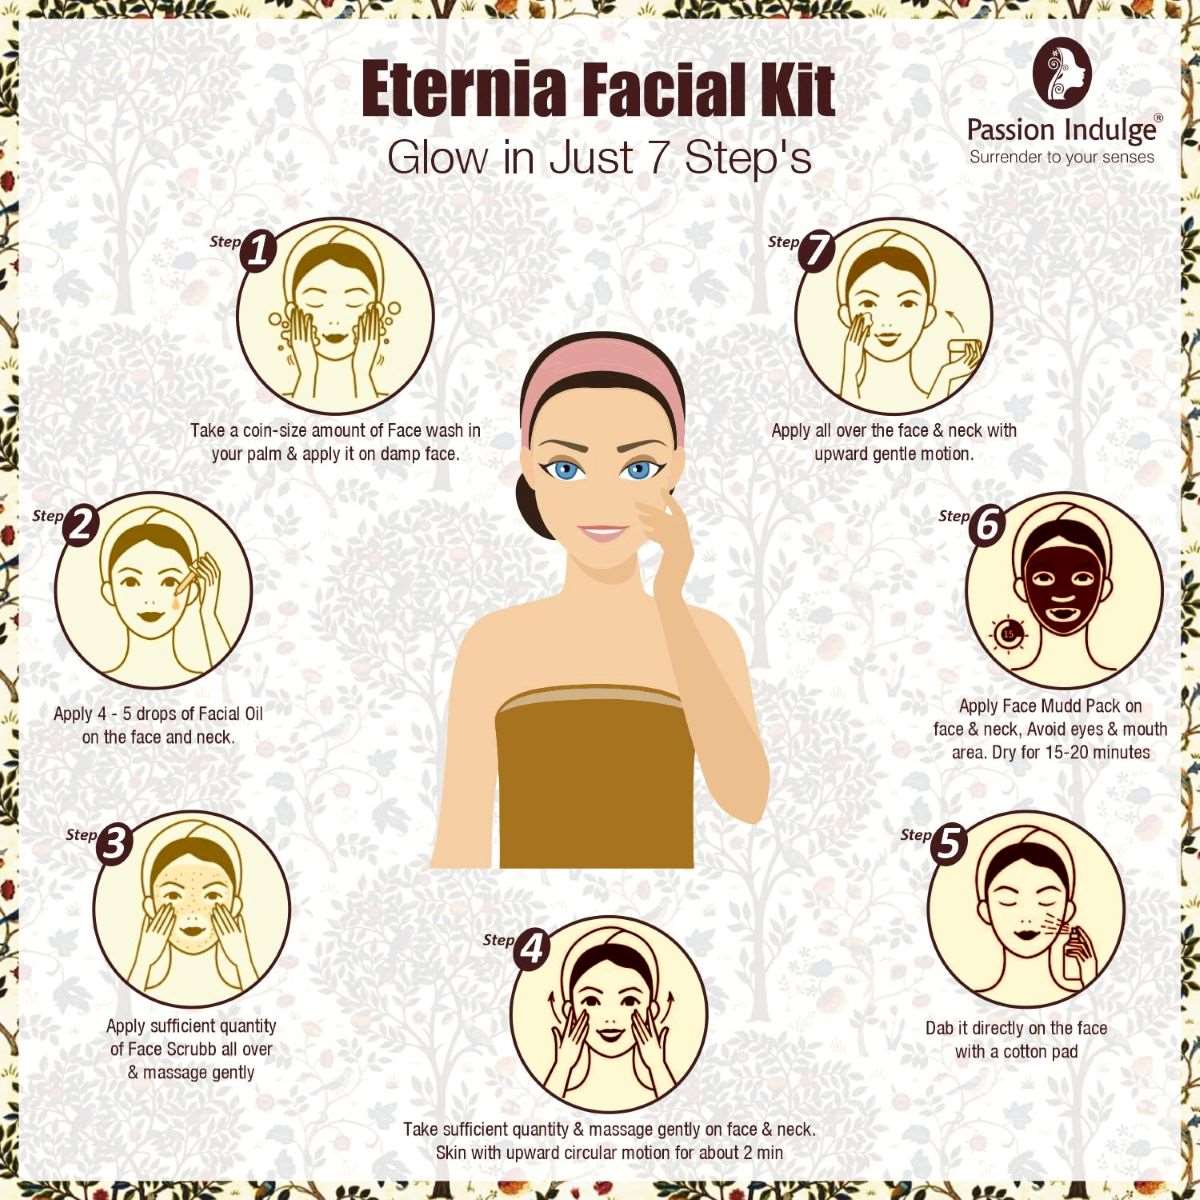 Eternia 7 Star Anti Aging Facial Kit | Anti Aging | Anti Wrinkle | Reduces Fine Lines & Wrinkles | Skin Hydration & Nourishes | Glowing Skin | Natural & Vegan | All Skin Type | Buy1 Get1 Free